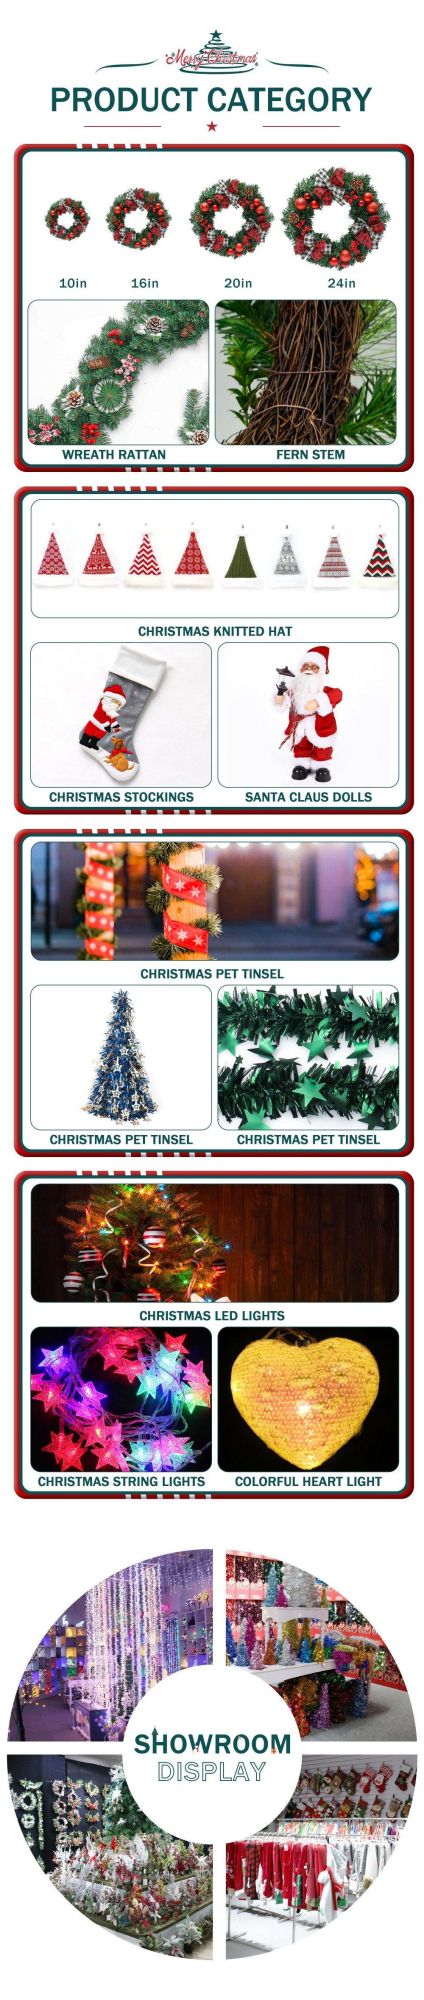 Yiwu Shuangyuan Christmas Factory Wholesale Christmas Bonknow for Christmas Tree Deco